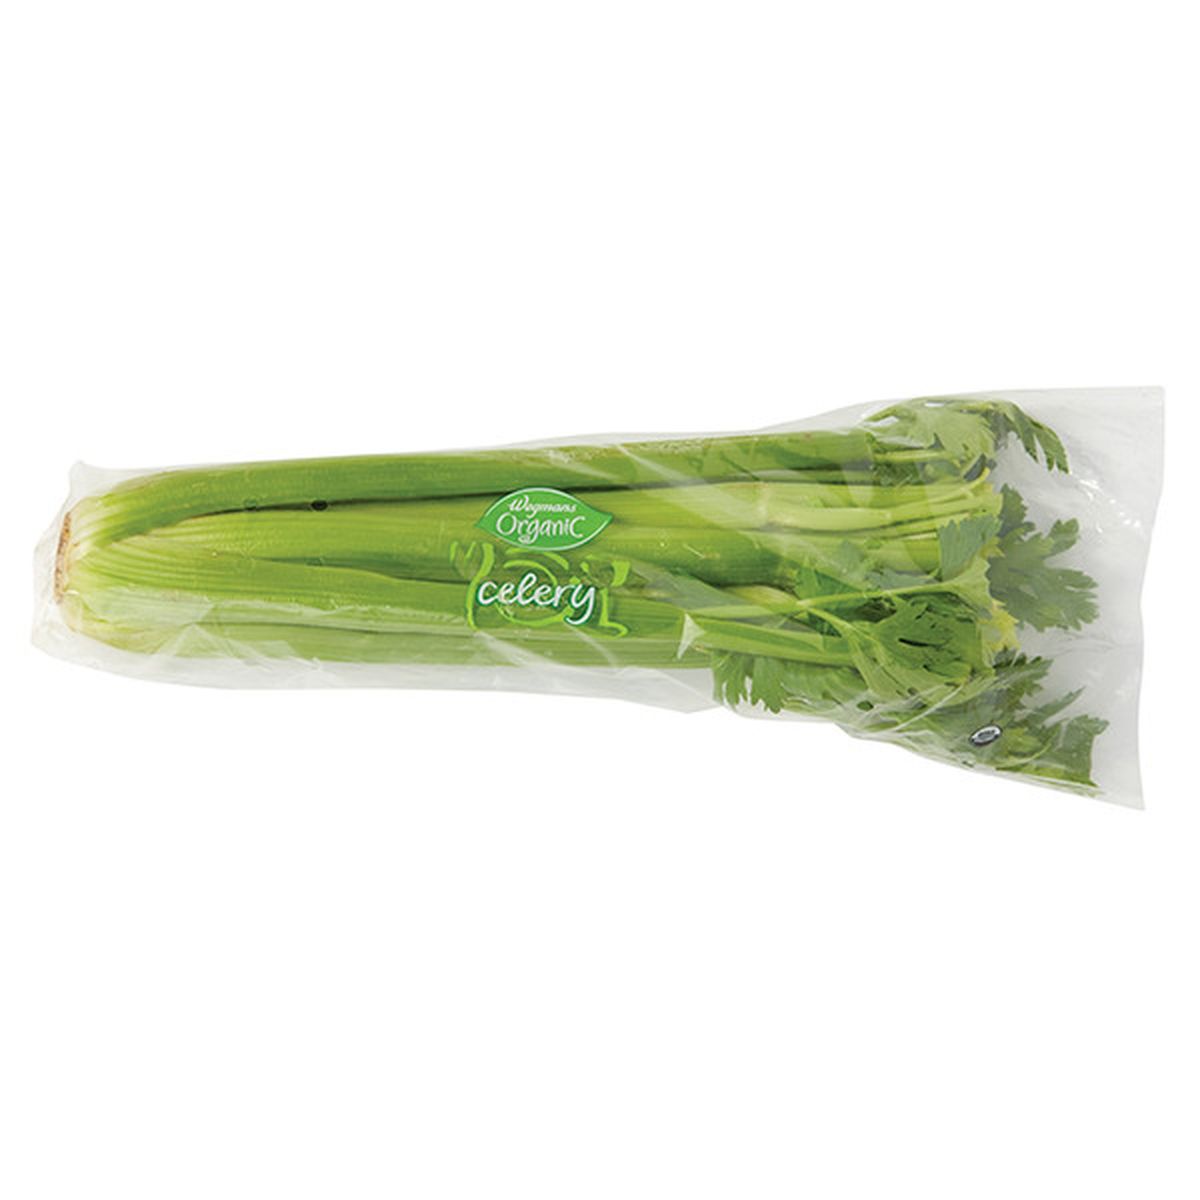 Calories in Wegmans Organic Celery